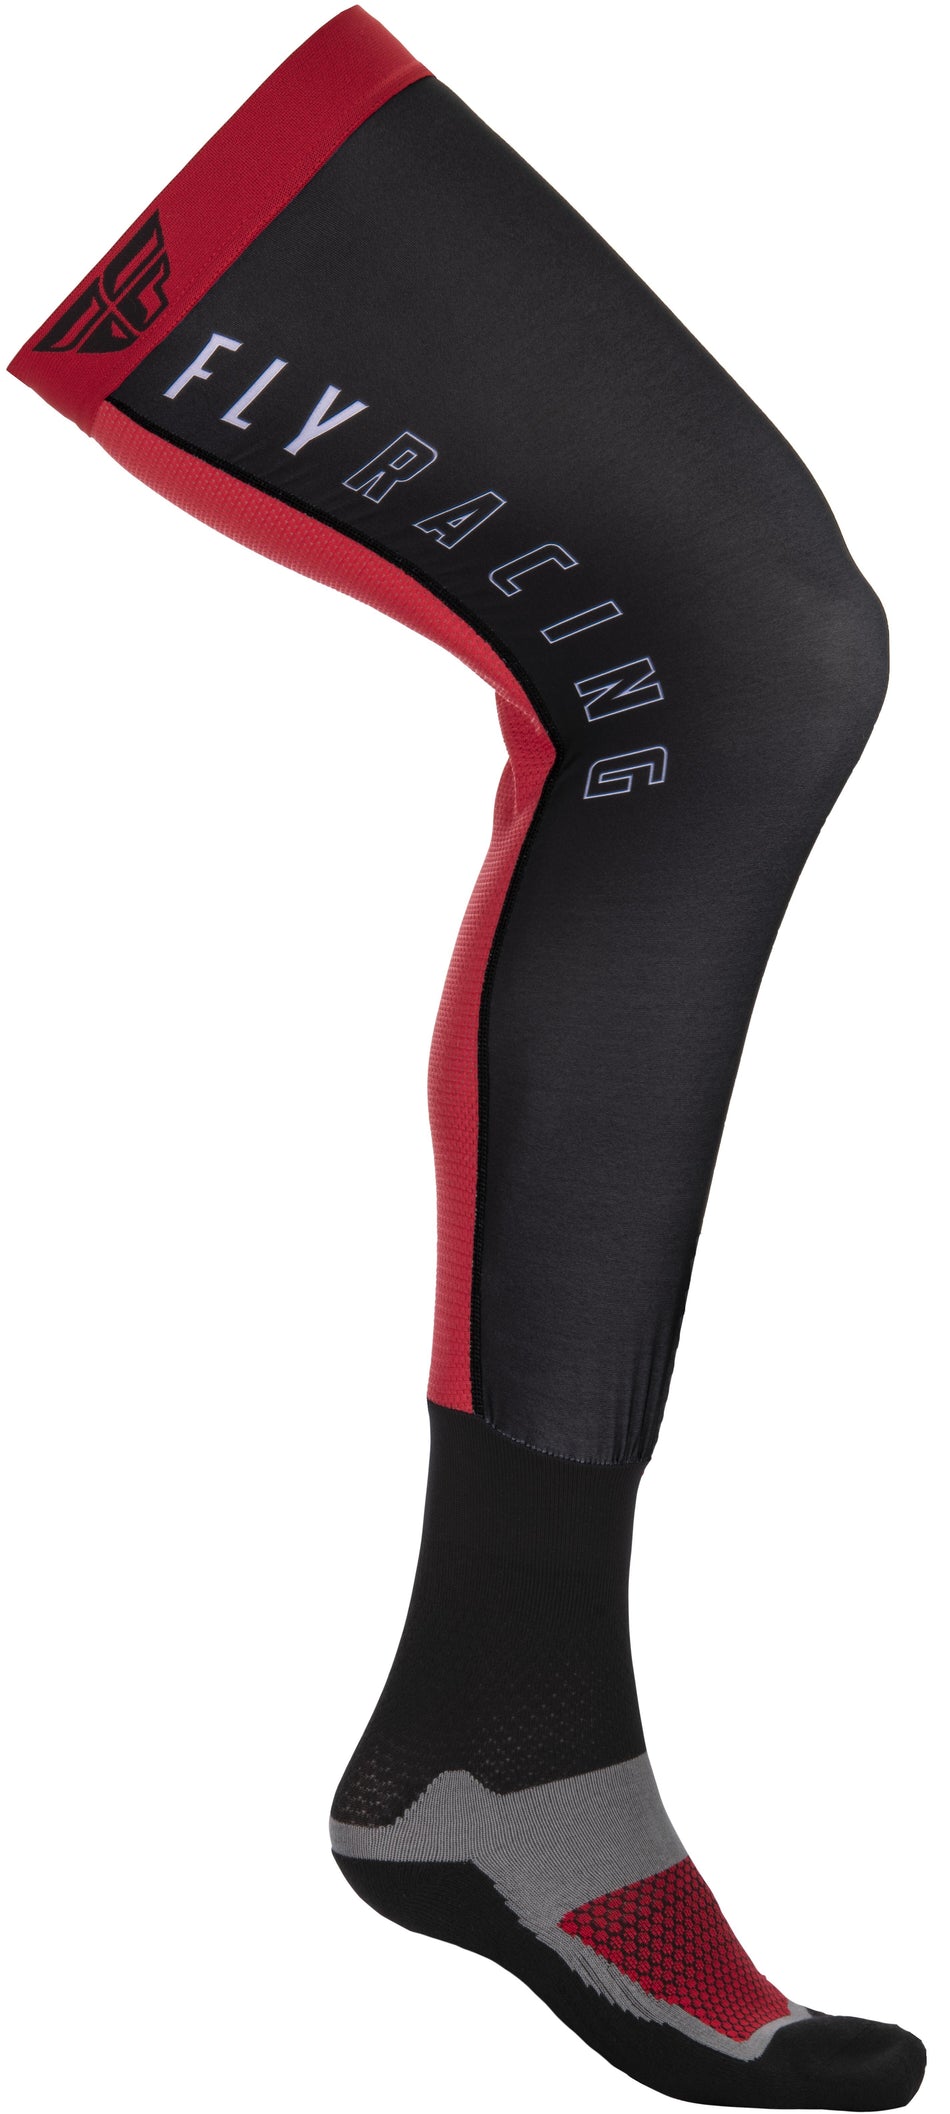 FLY RACING Knee Brace Sock Red/Black Sm/Md 350-0446S